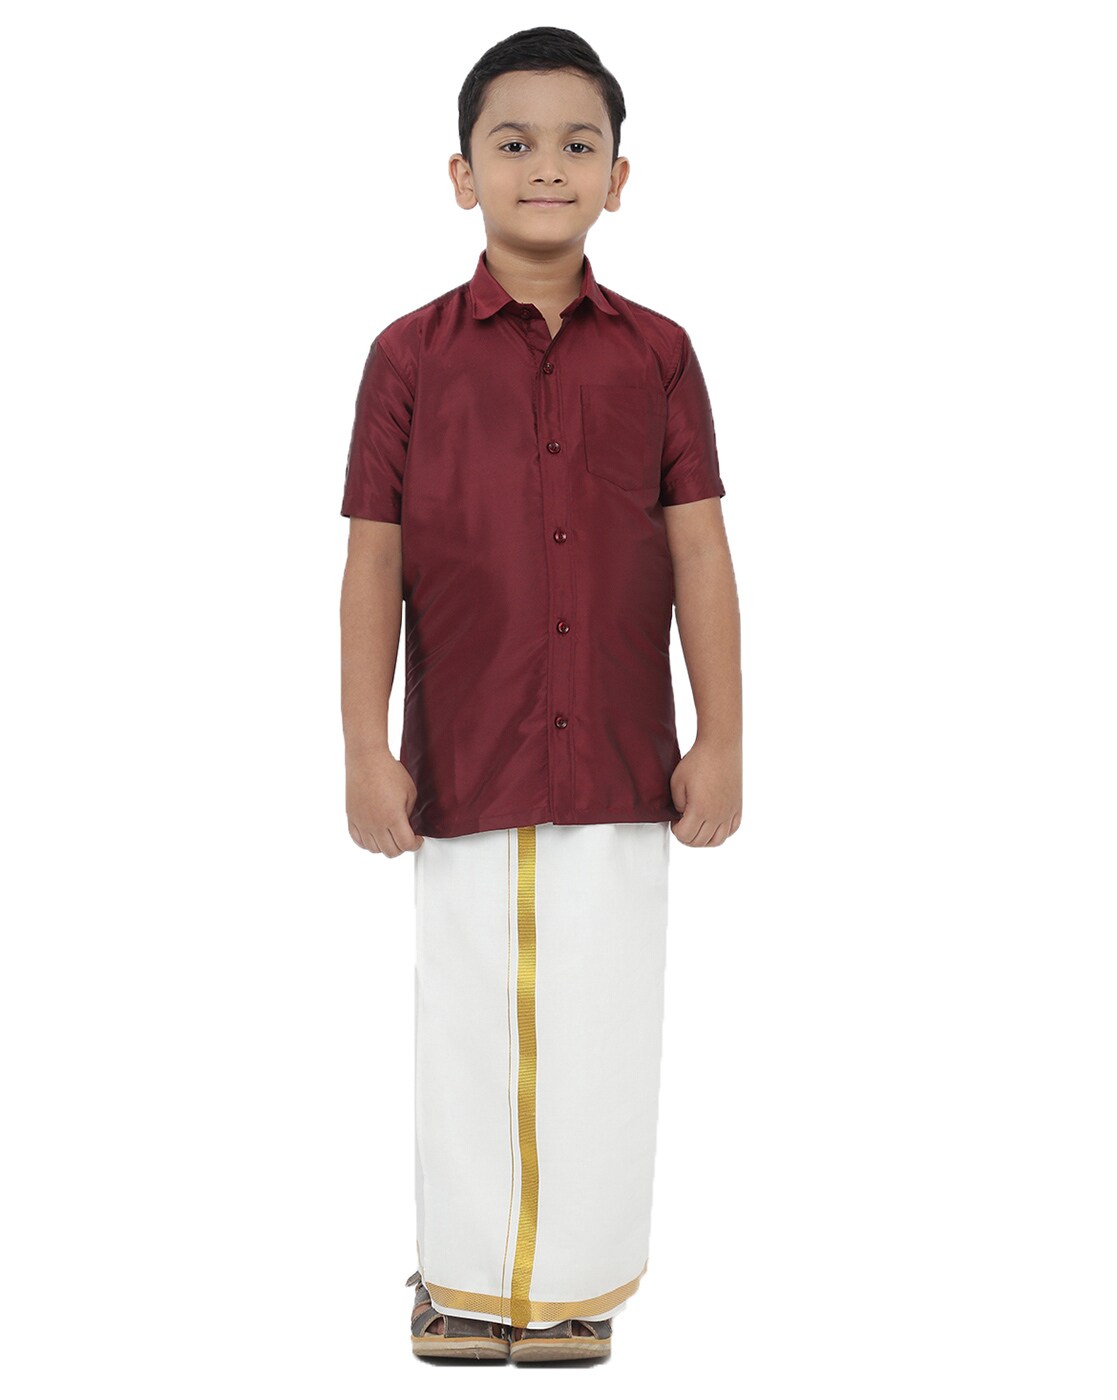 South Indian Kids Dhoti & Shirt With Mundu, 3 Piece Set- Design# B-Yel